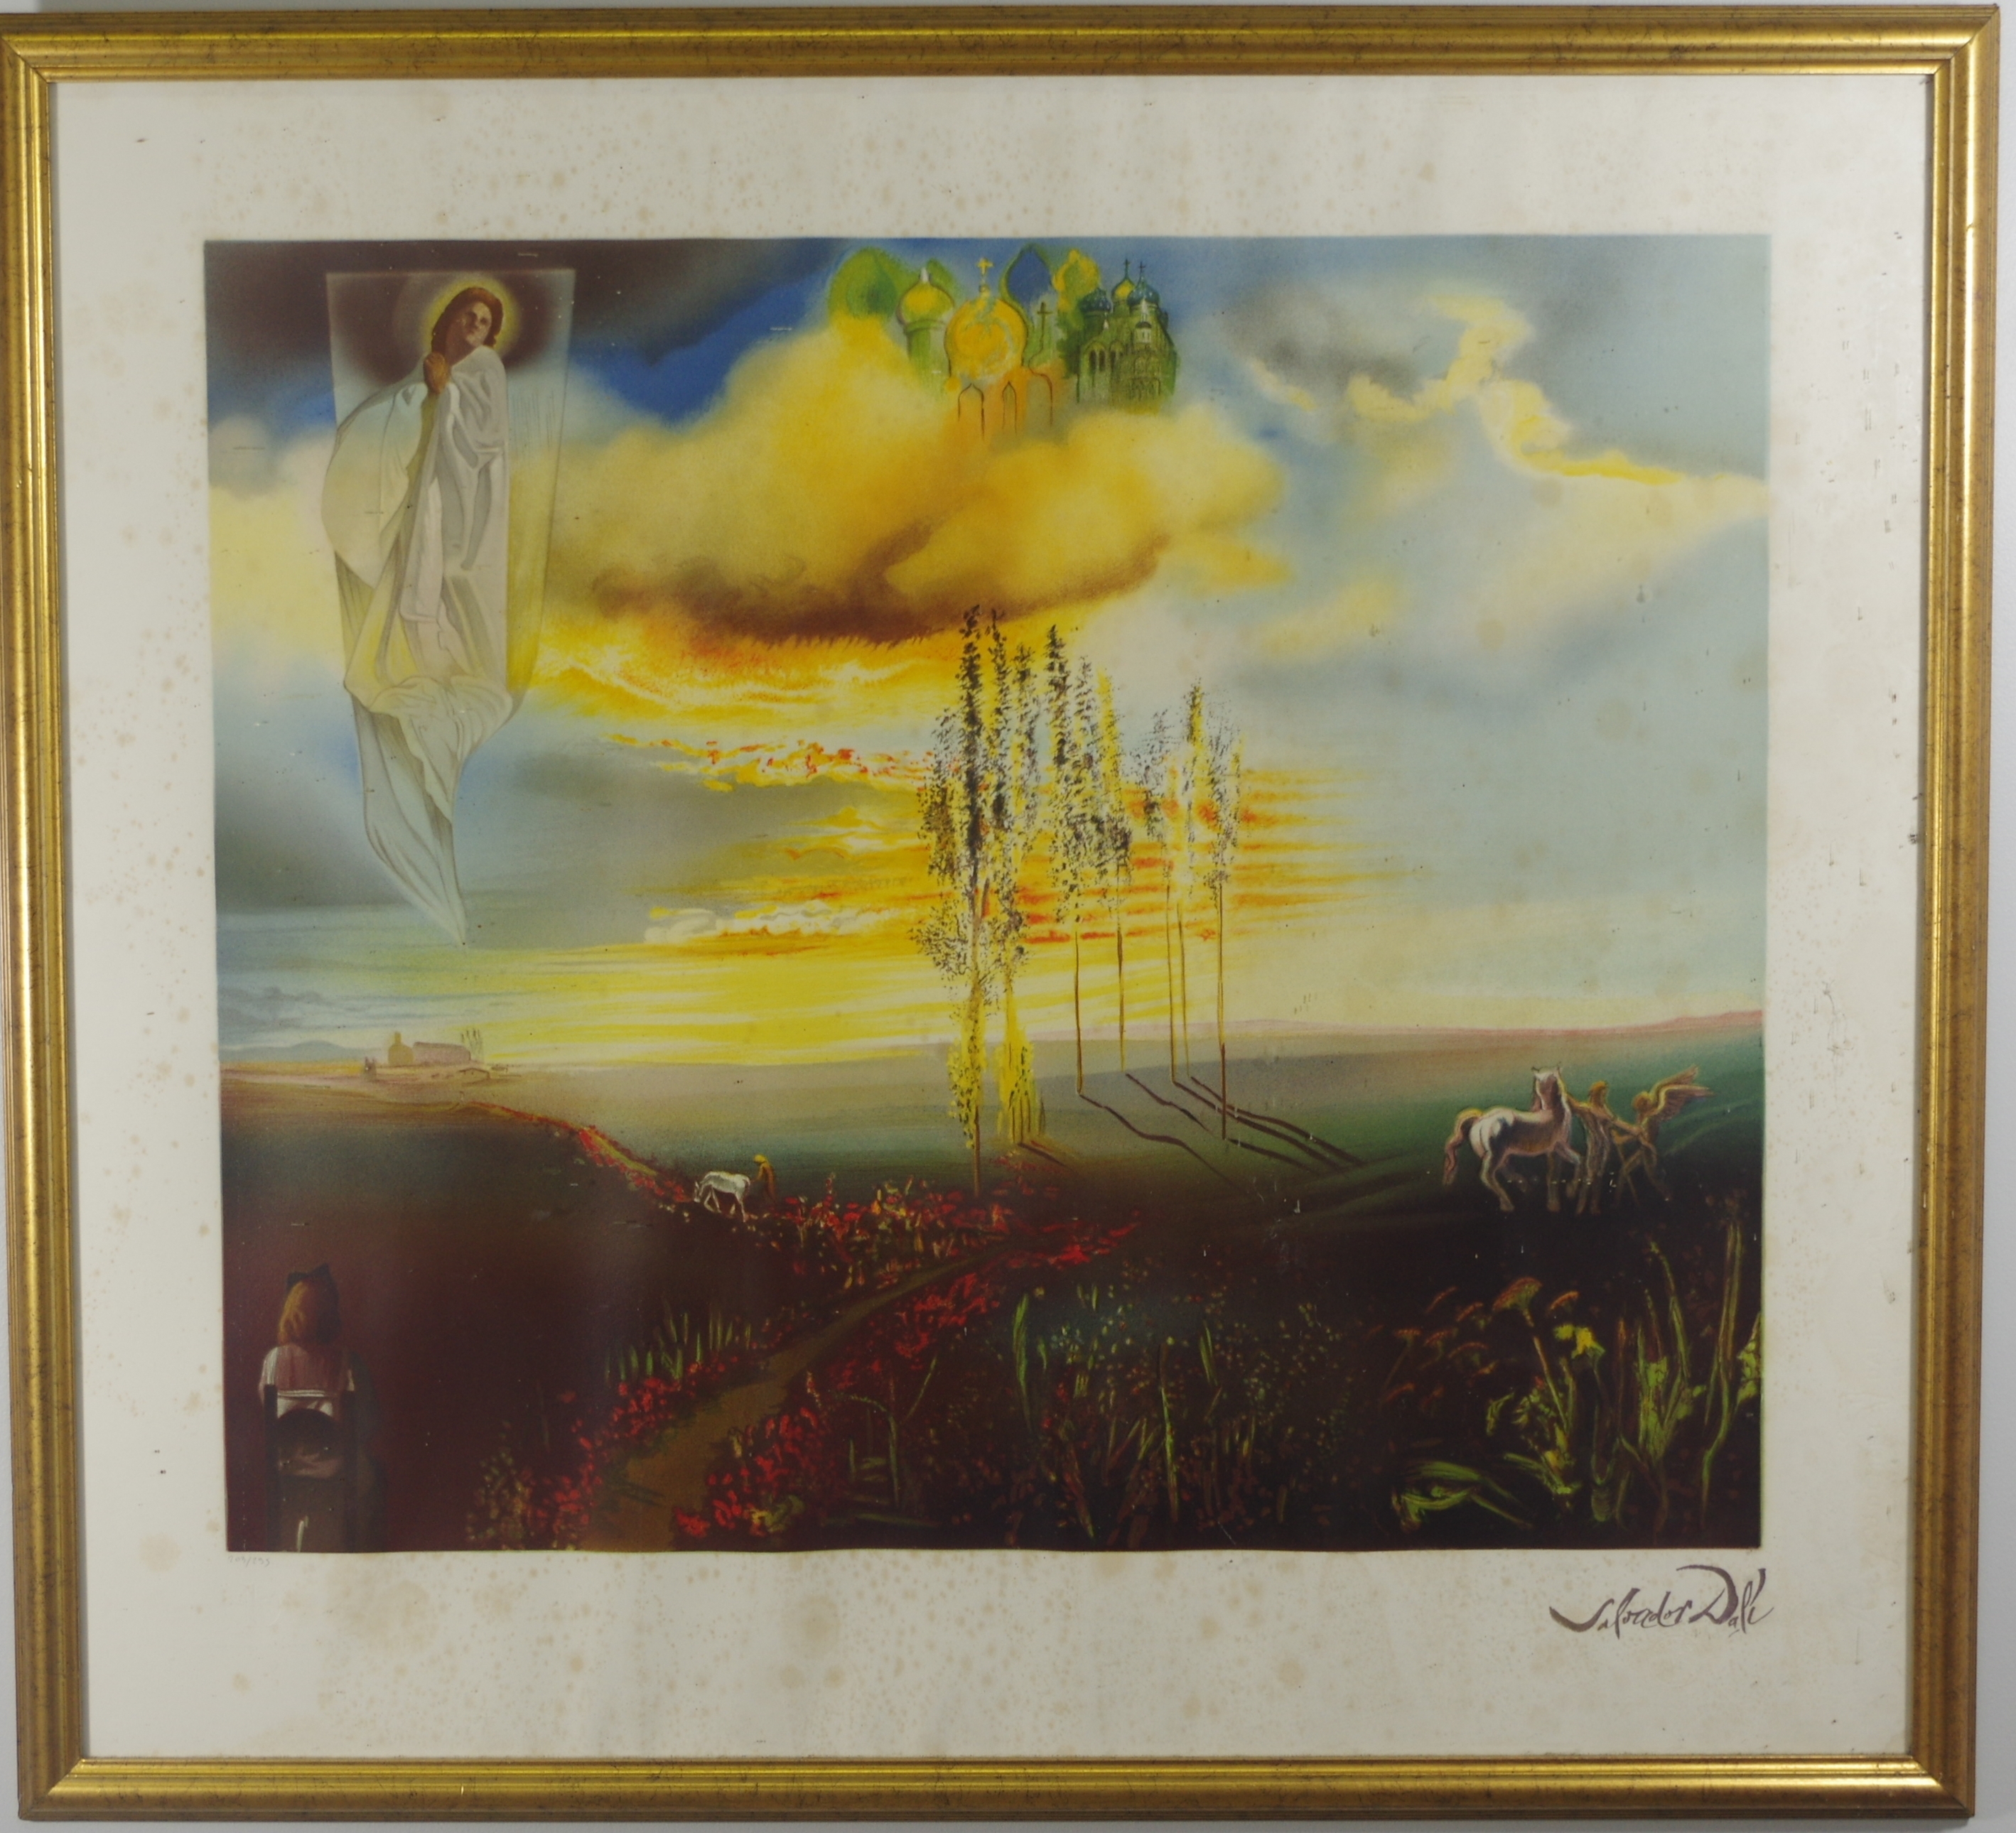 " l'élévation" by Salvador Dalí